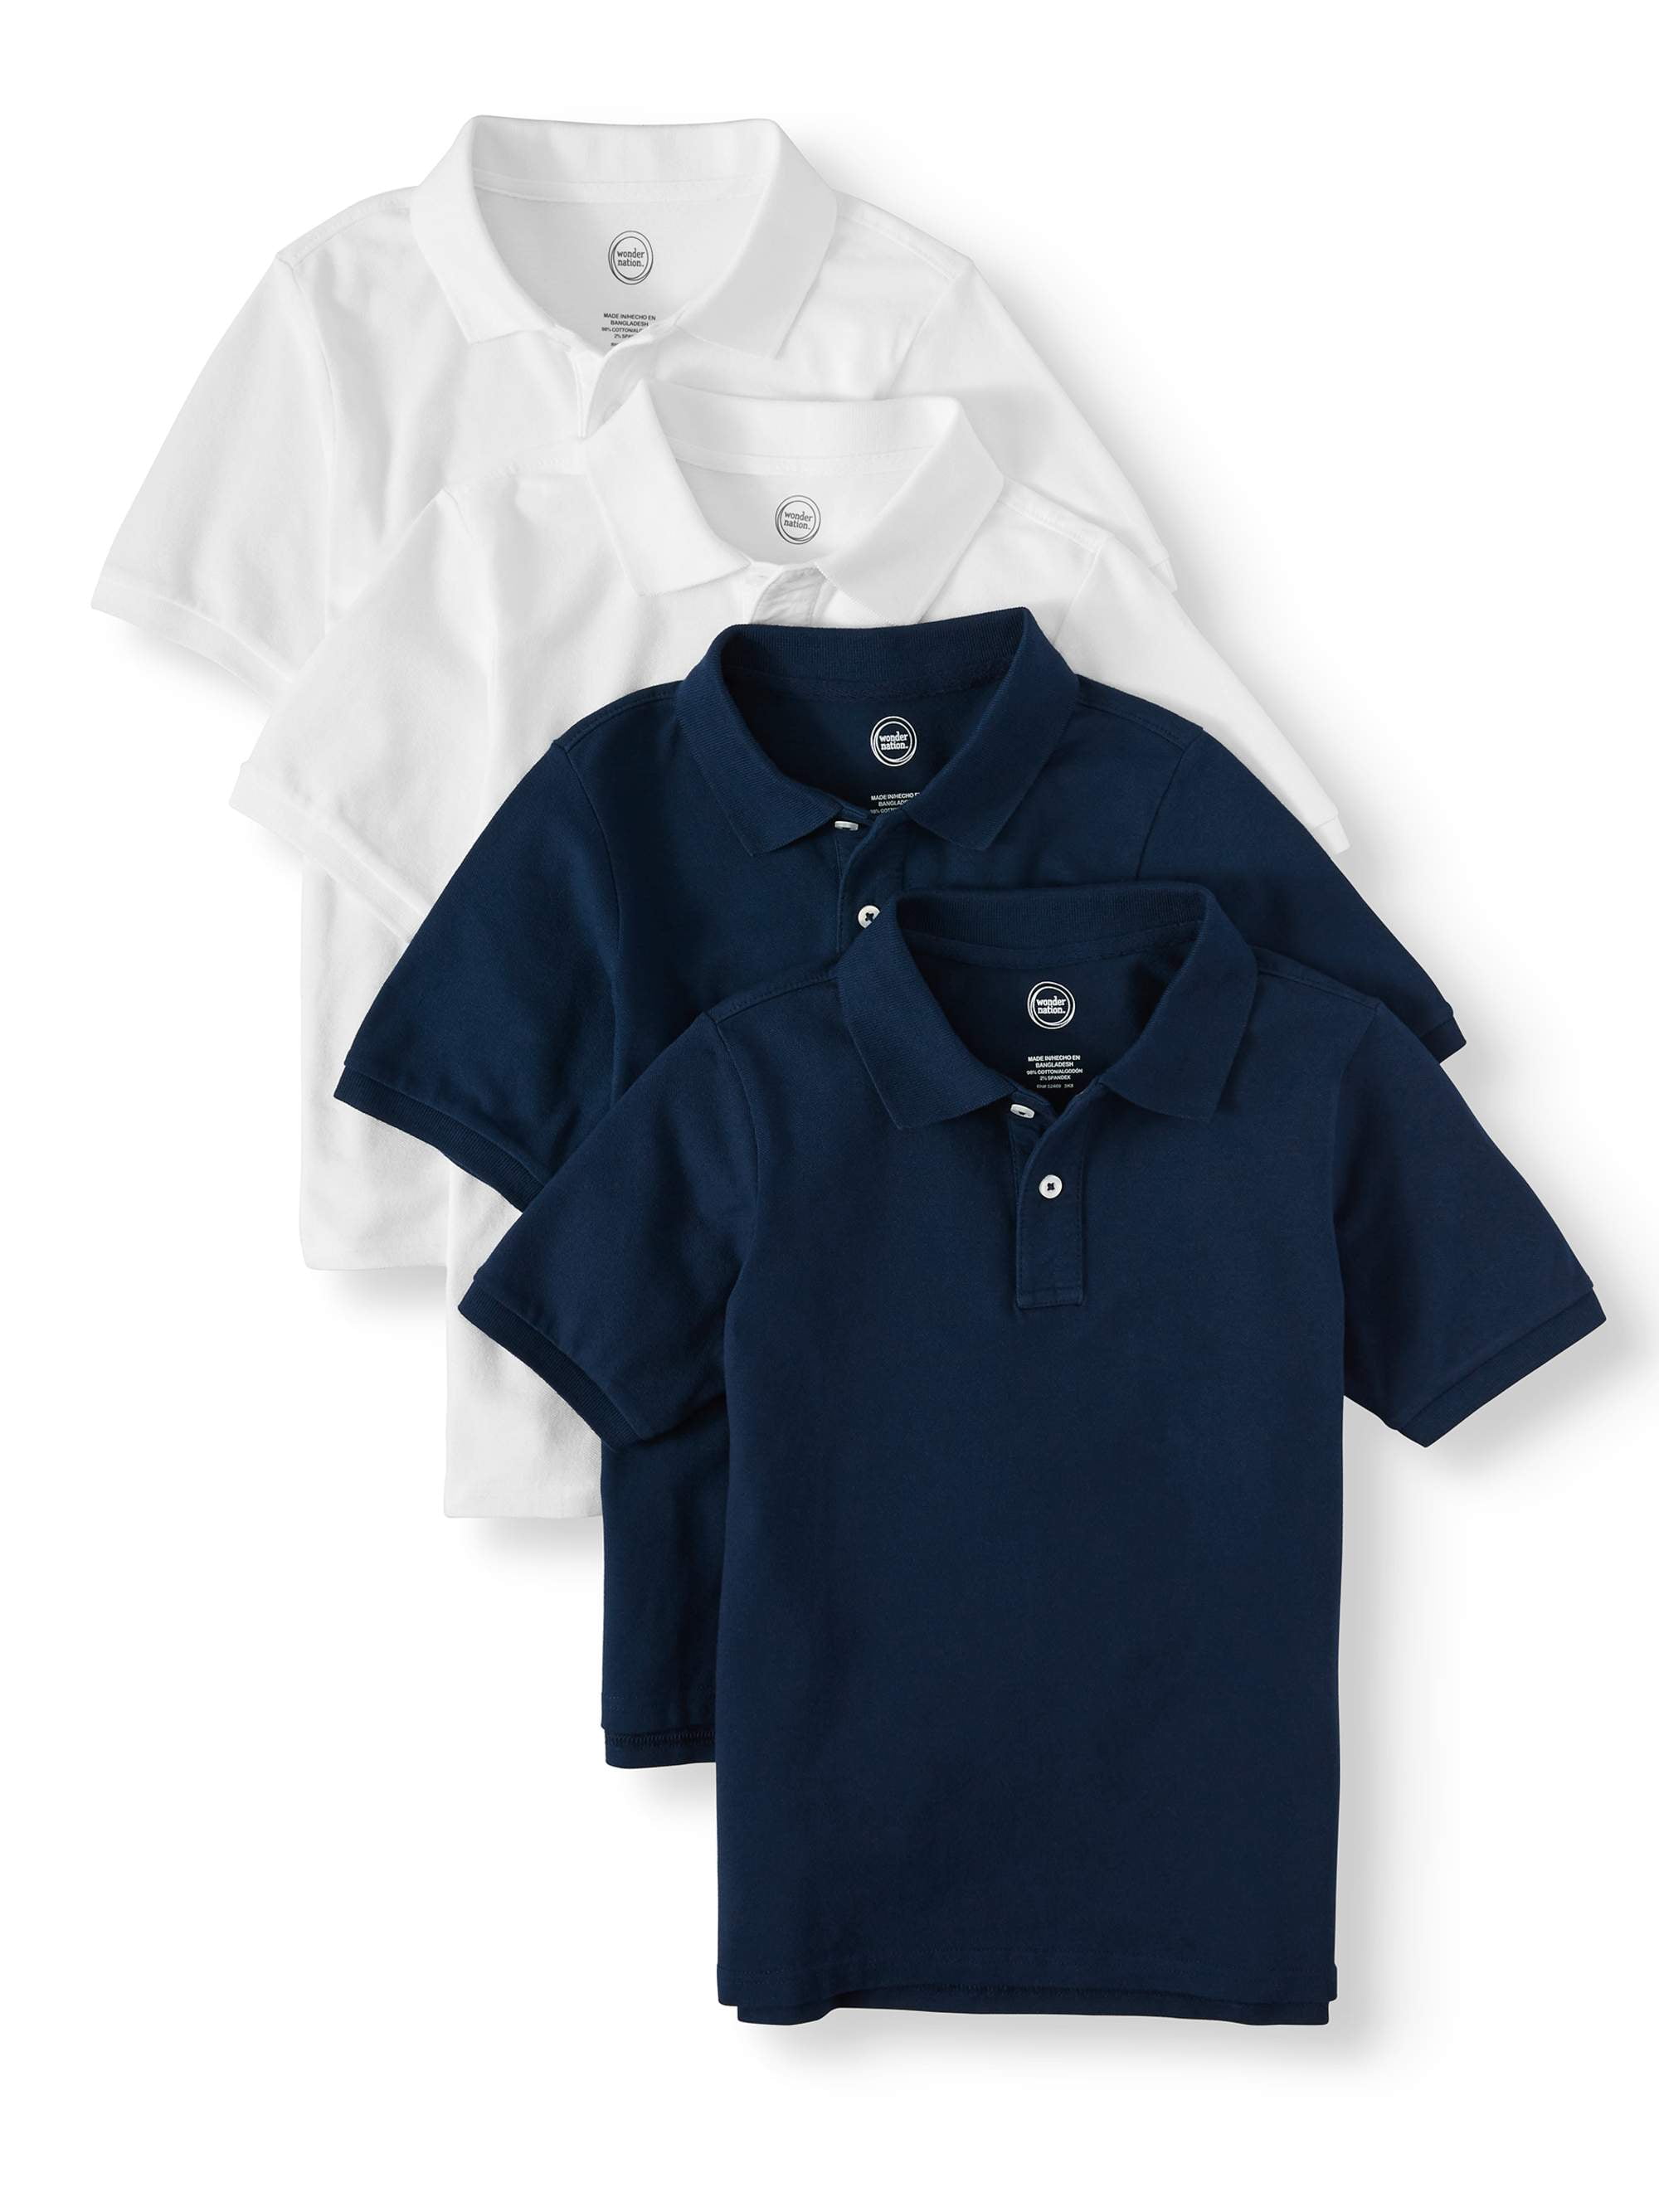 Boys & Girls White Pique Polo Shirt School Uniform Short Sleeve Sizes 4 to 18 